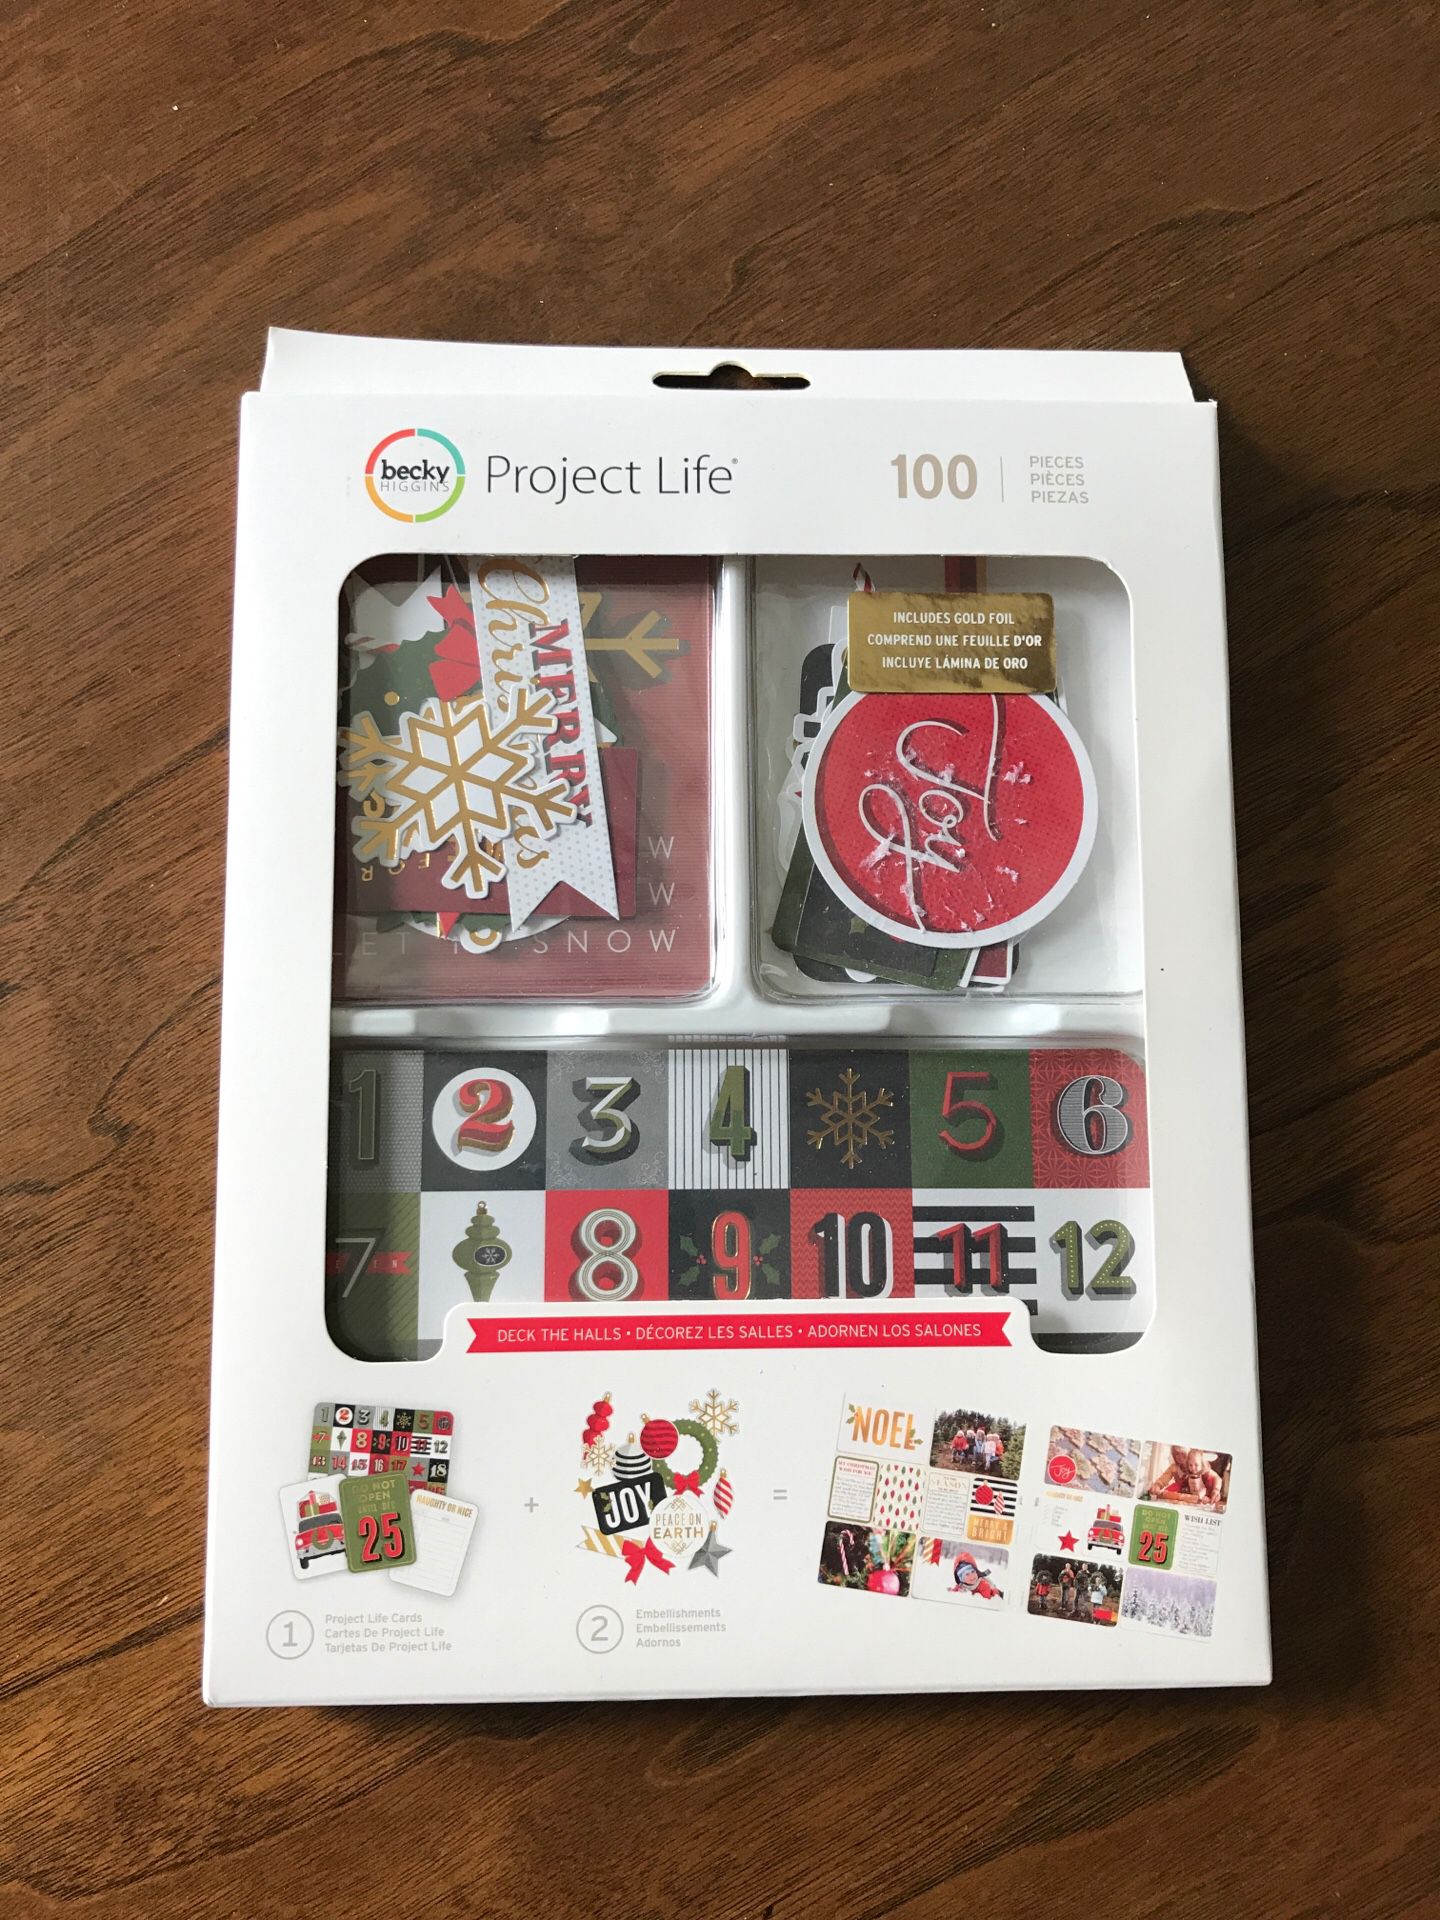 Project Life “Deck The Halls” 100 pc set